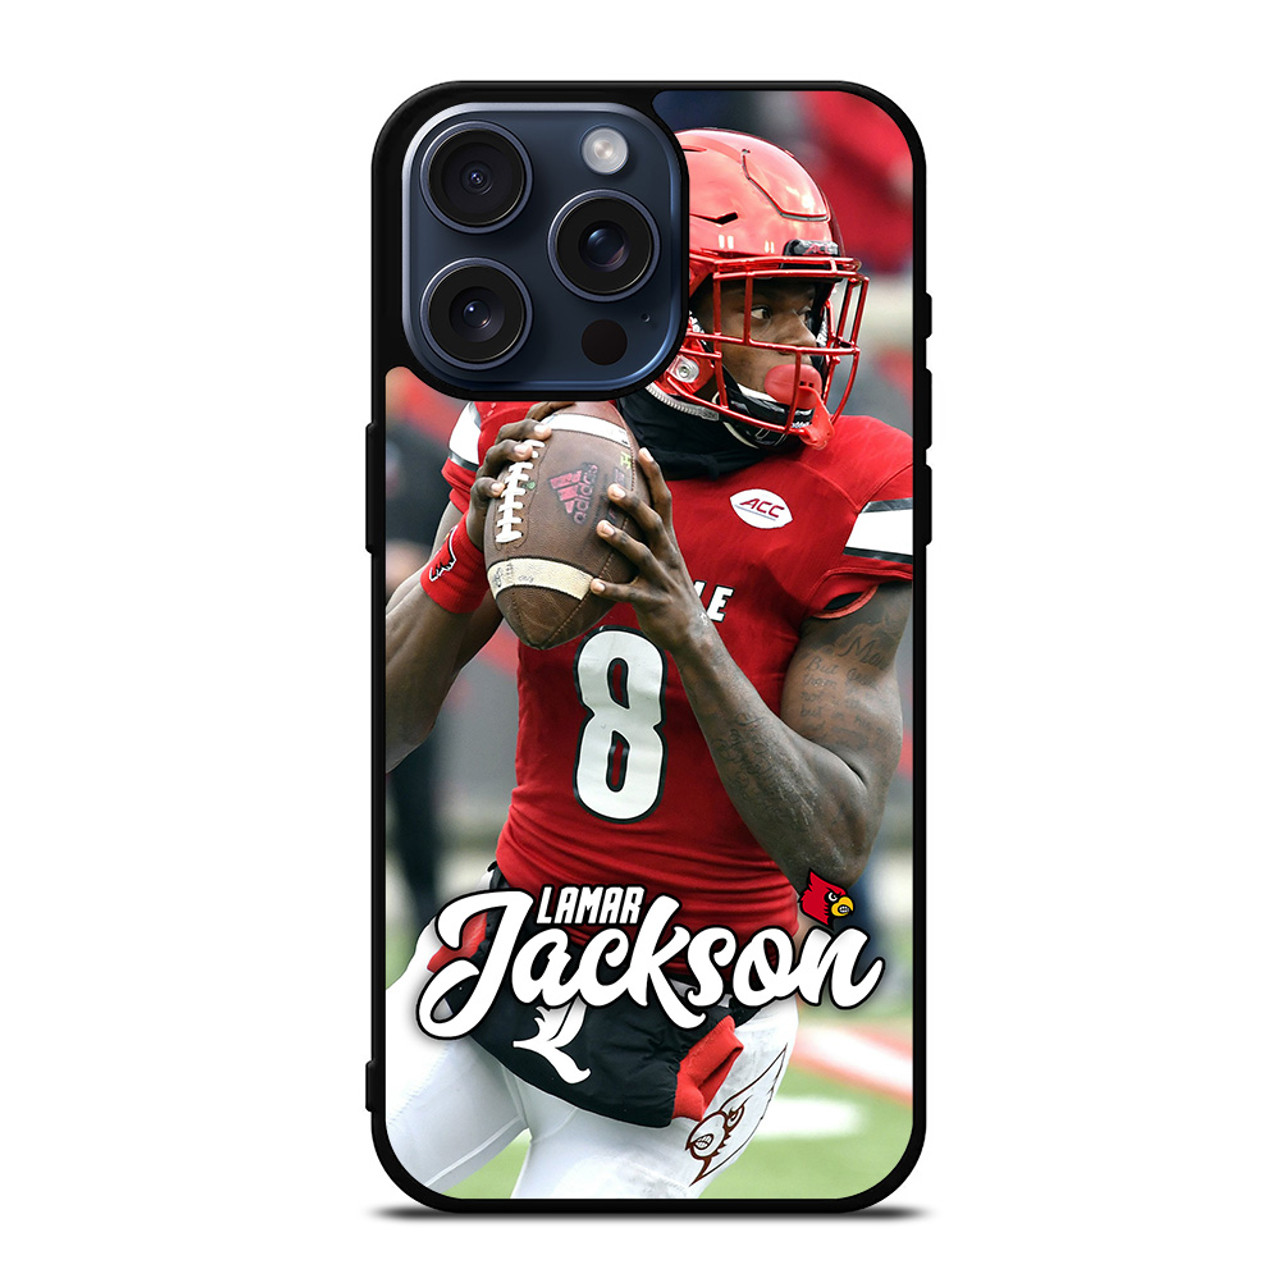 LAMAR JACKSON LOUISVILLE iPhone 15 Pro Max Case Cover